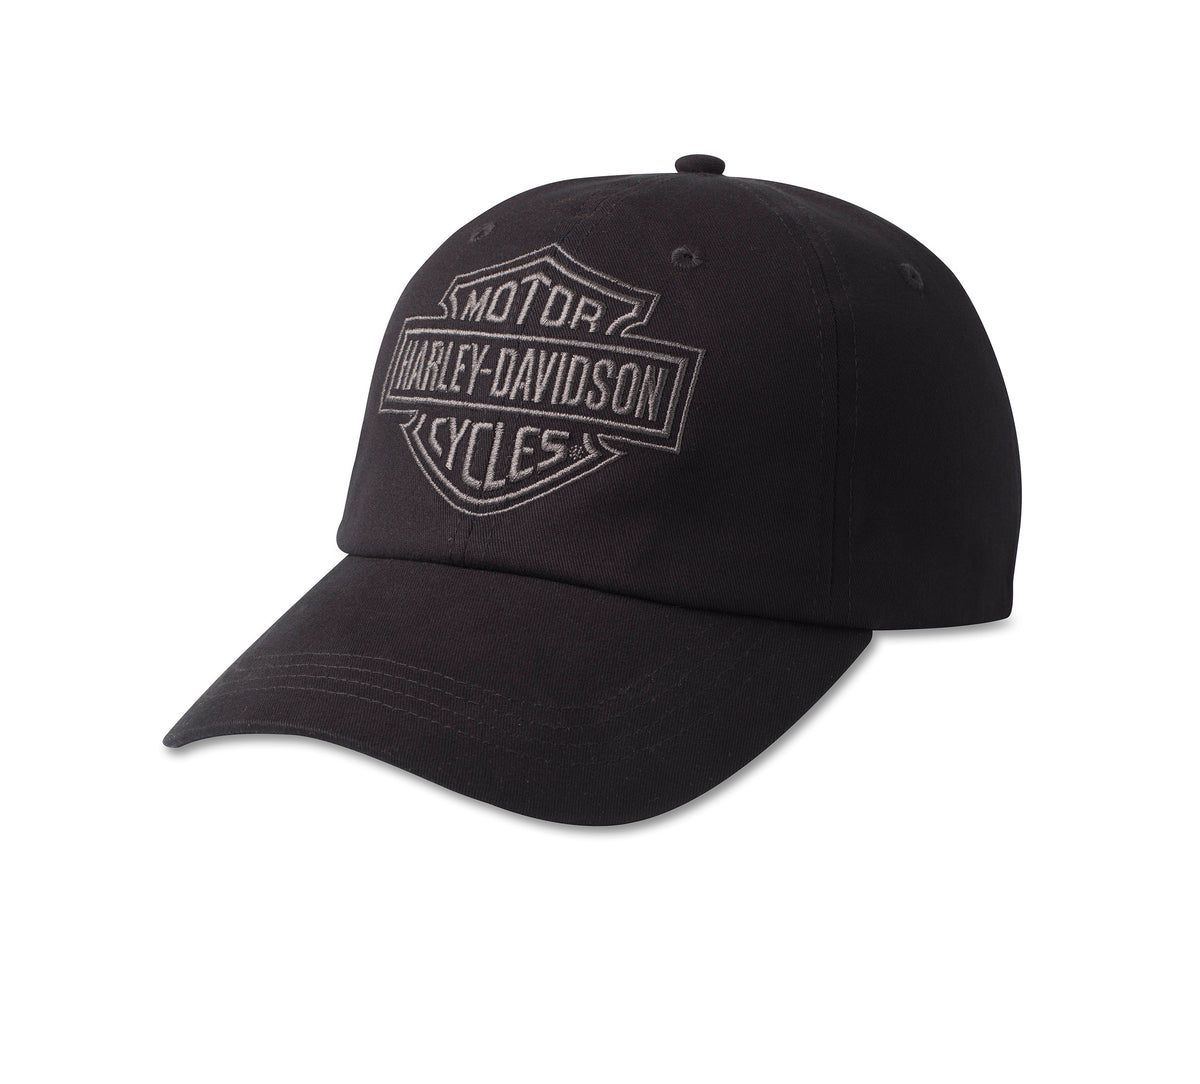 Harley Davidson Authentic Bar & Shield Baseball Cap - Black Beauty